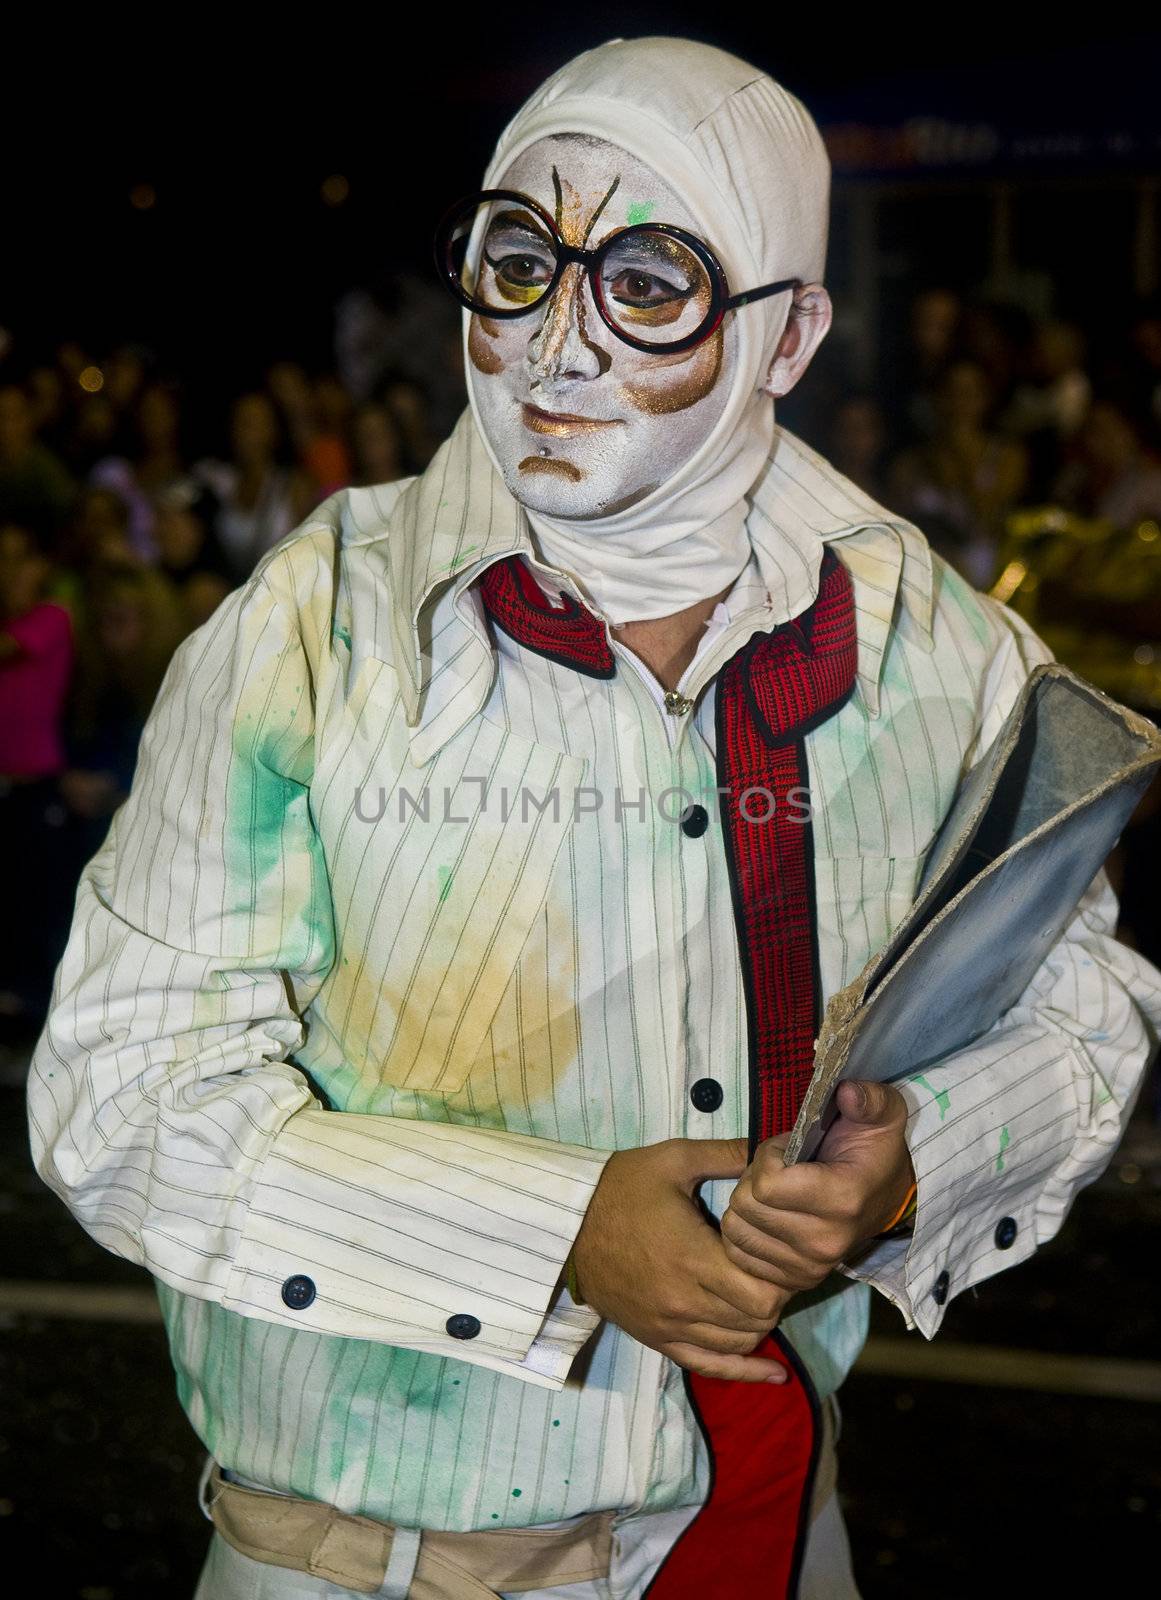 Carnaval in Montevideo by kobby_dagan